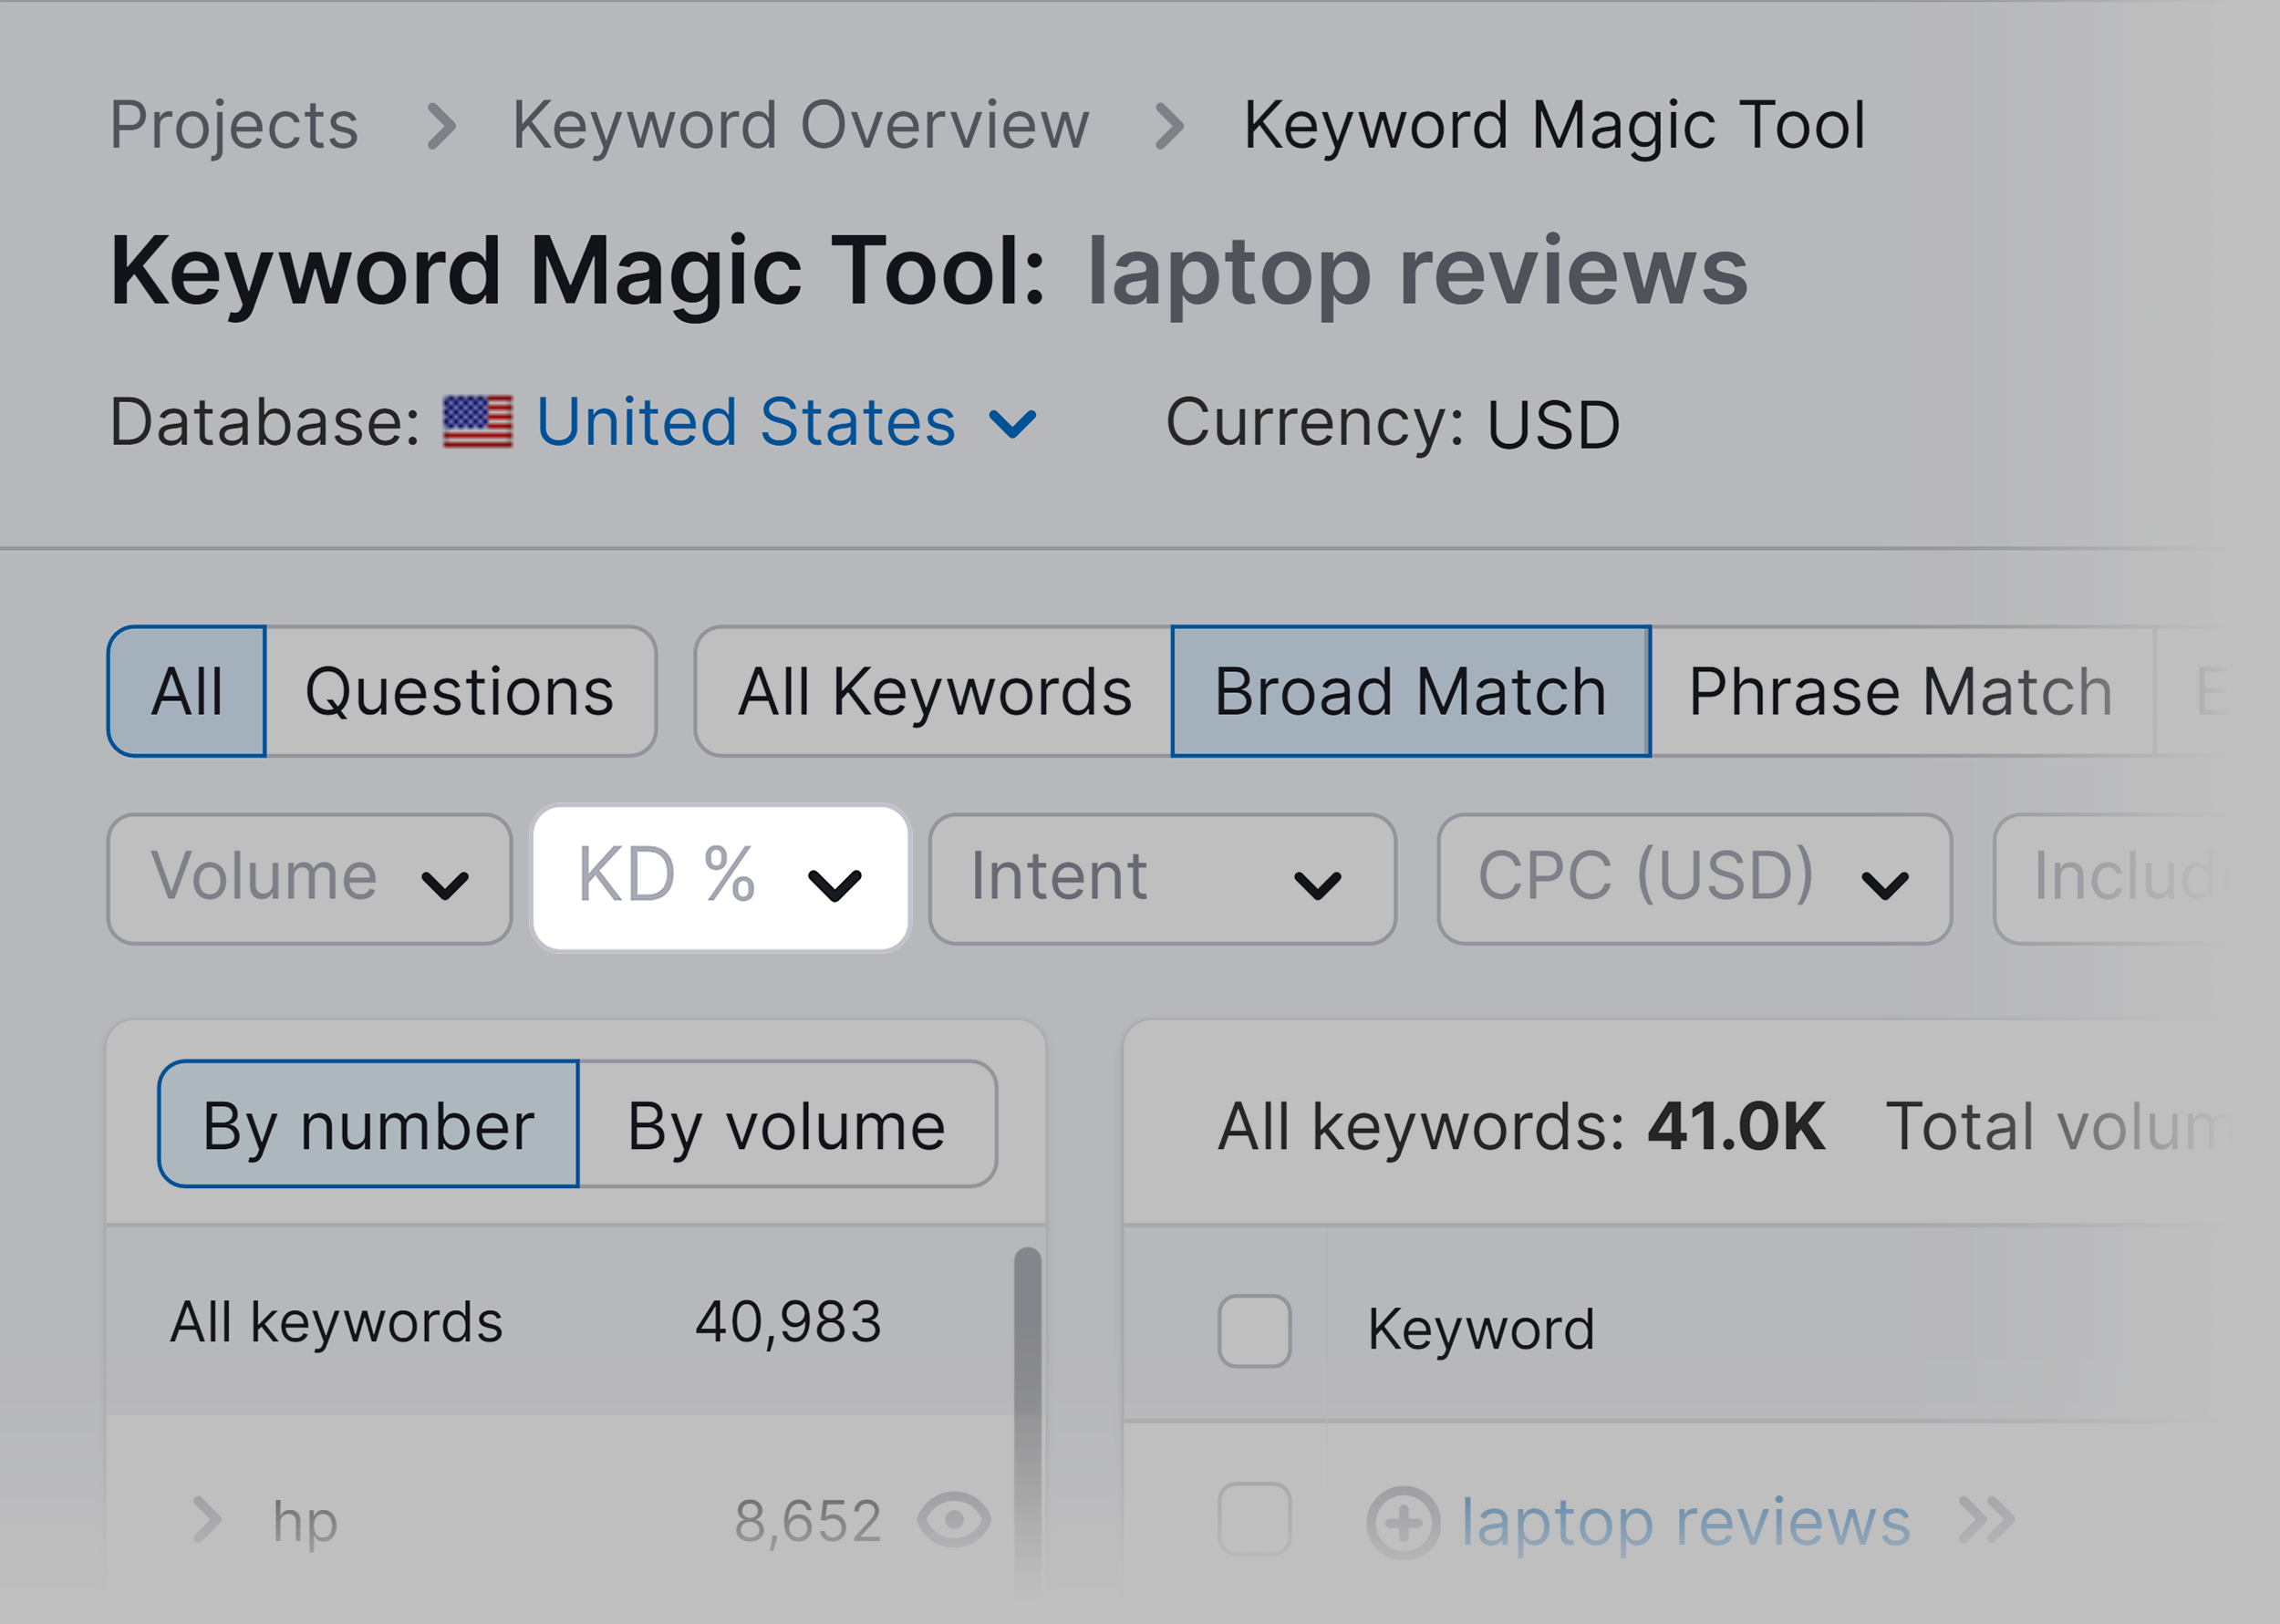 Keyword Magic Tool – KD filter